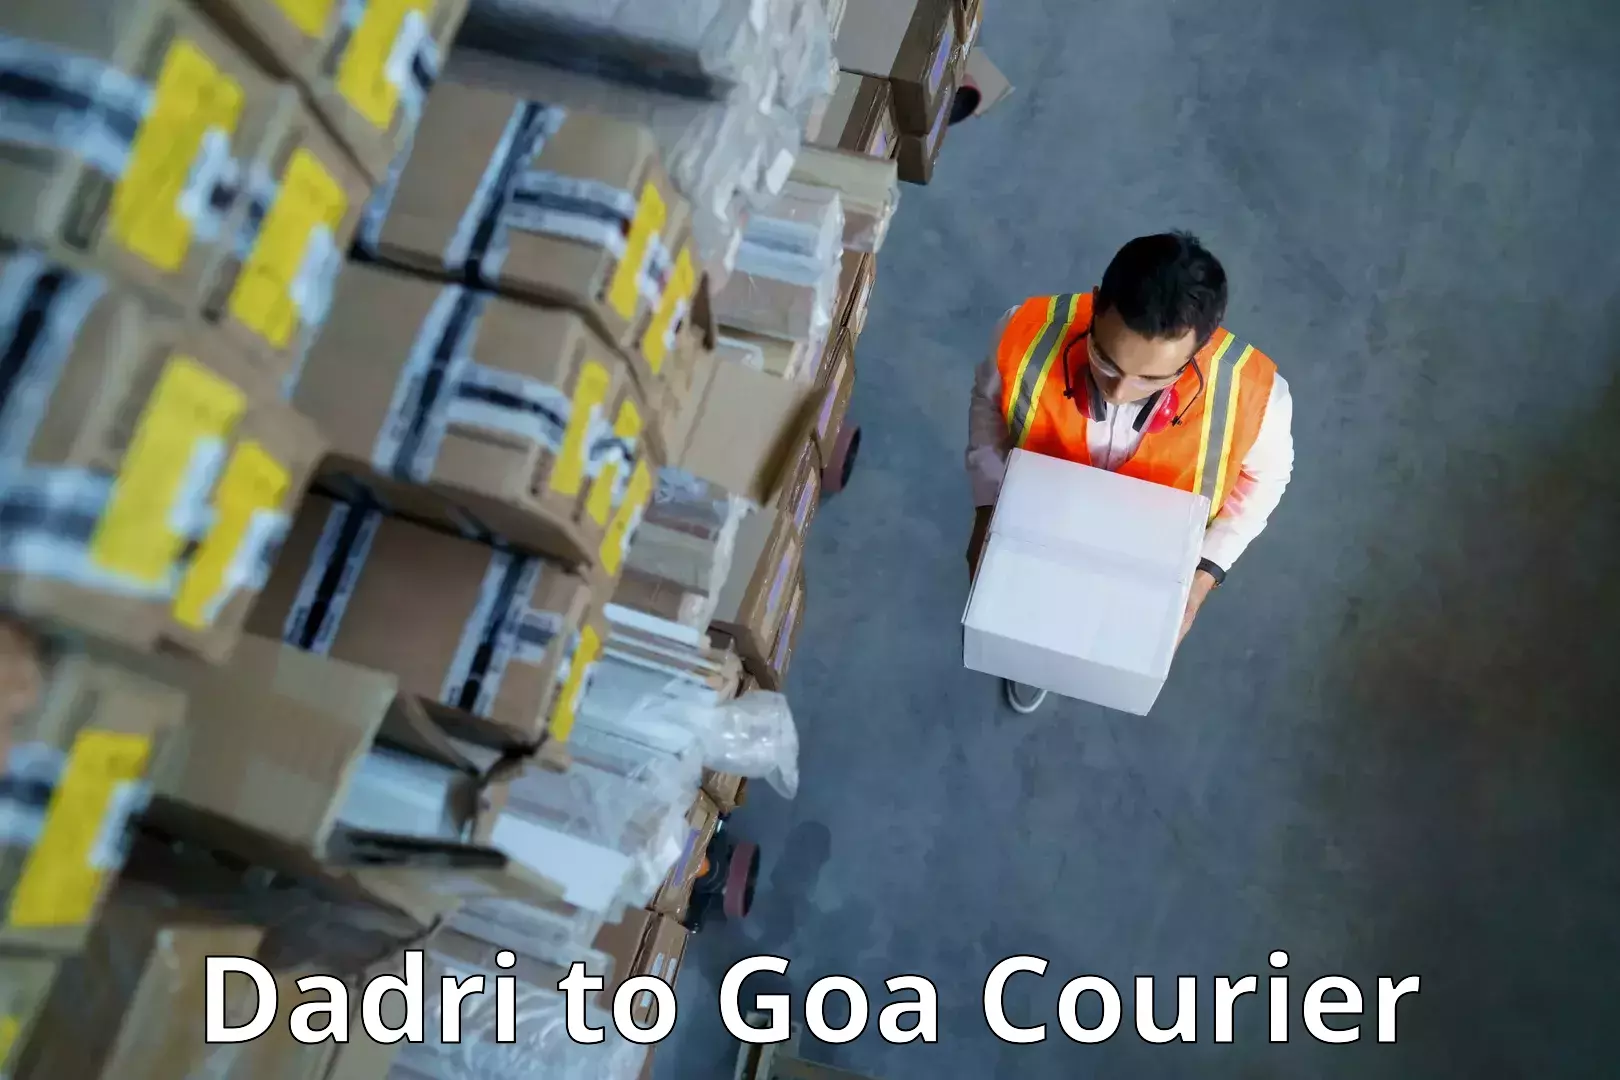 User-friendly delivery service Dadri to Ponda